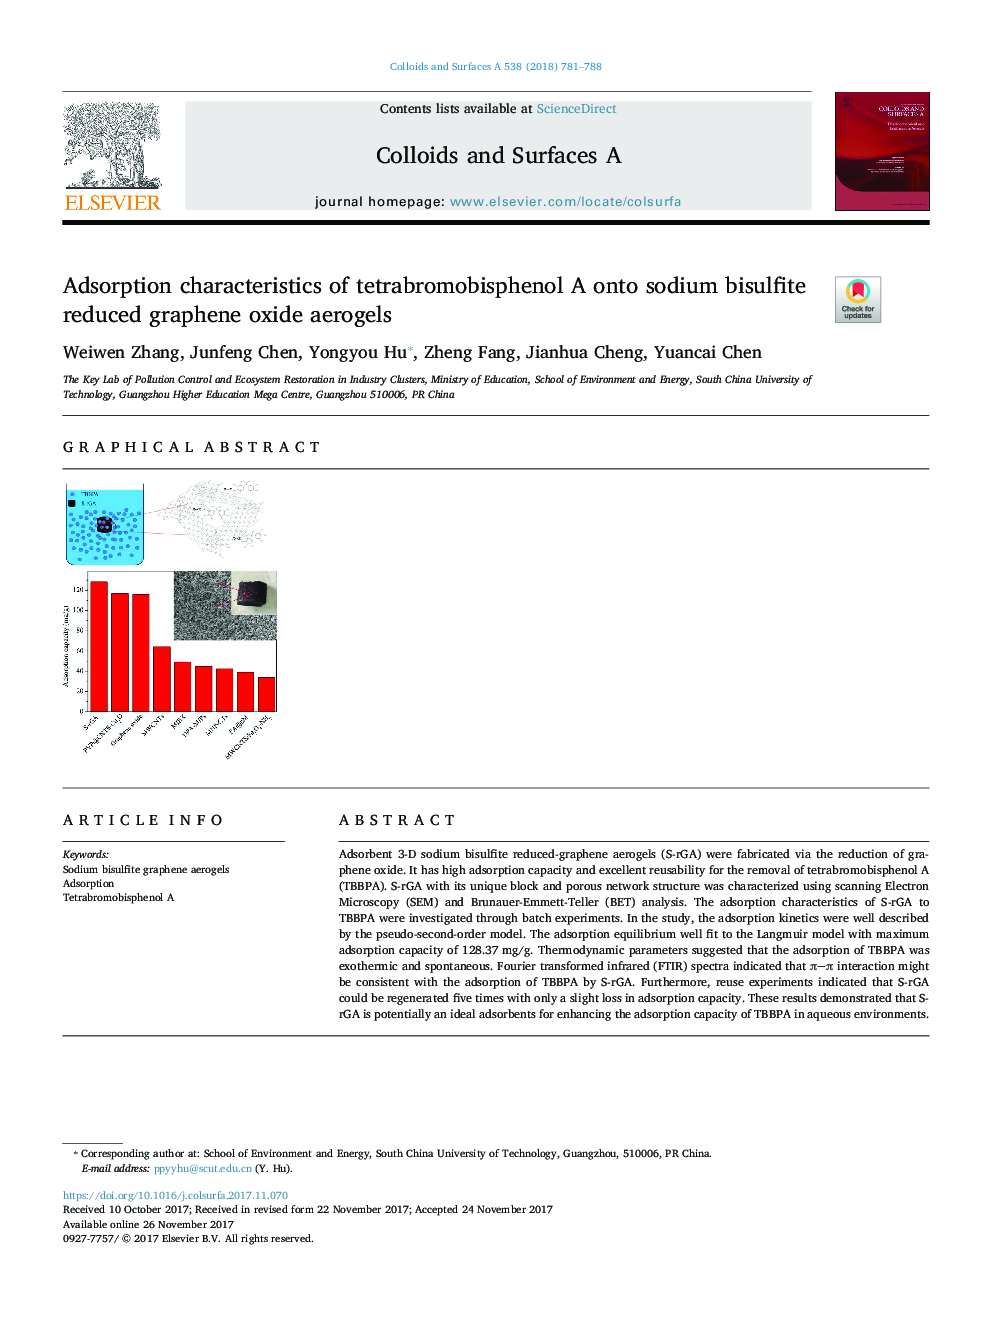 Adsorption characteristics of tetrabromobisphenol A onto sodium bisulfite reduced graphene oxide aerogels